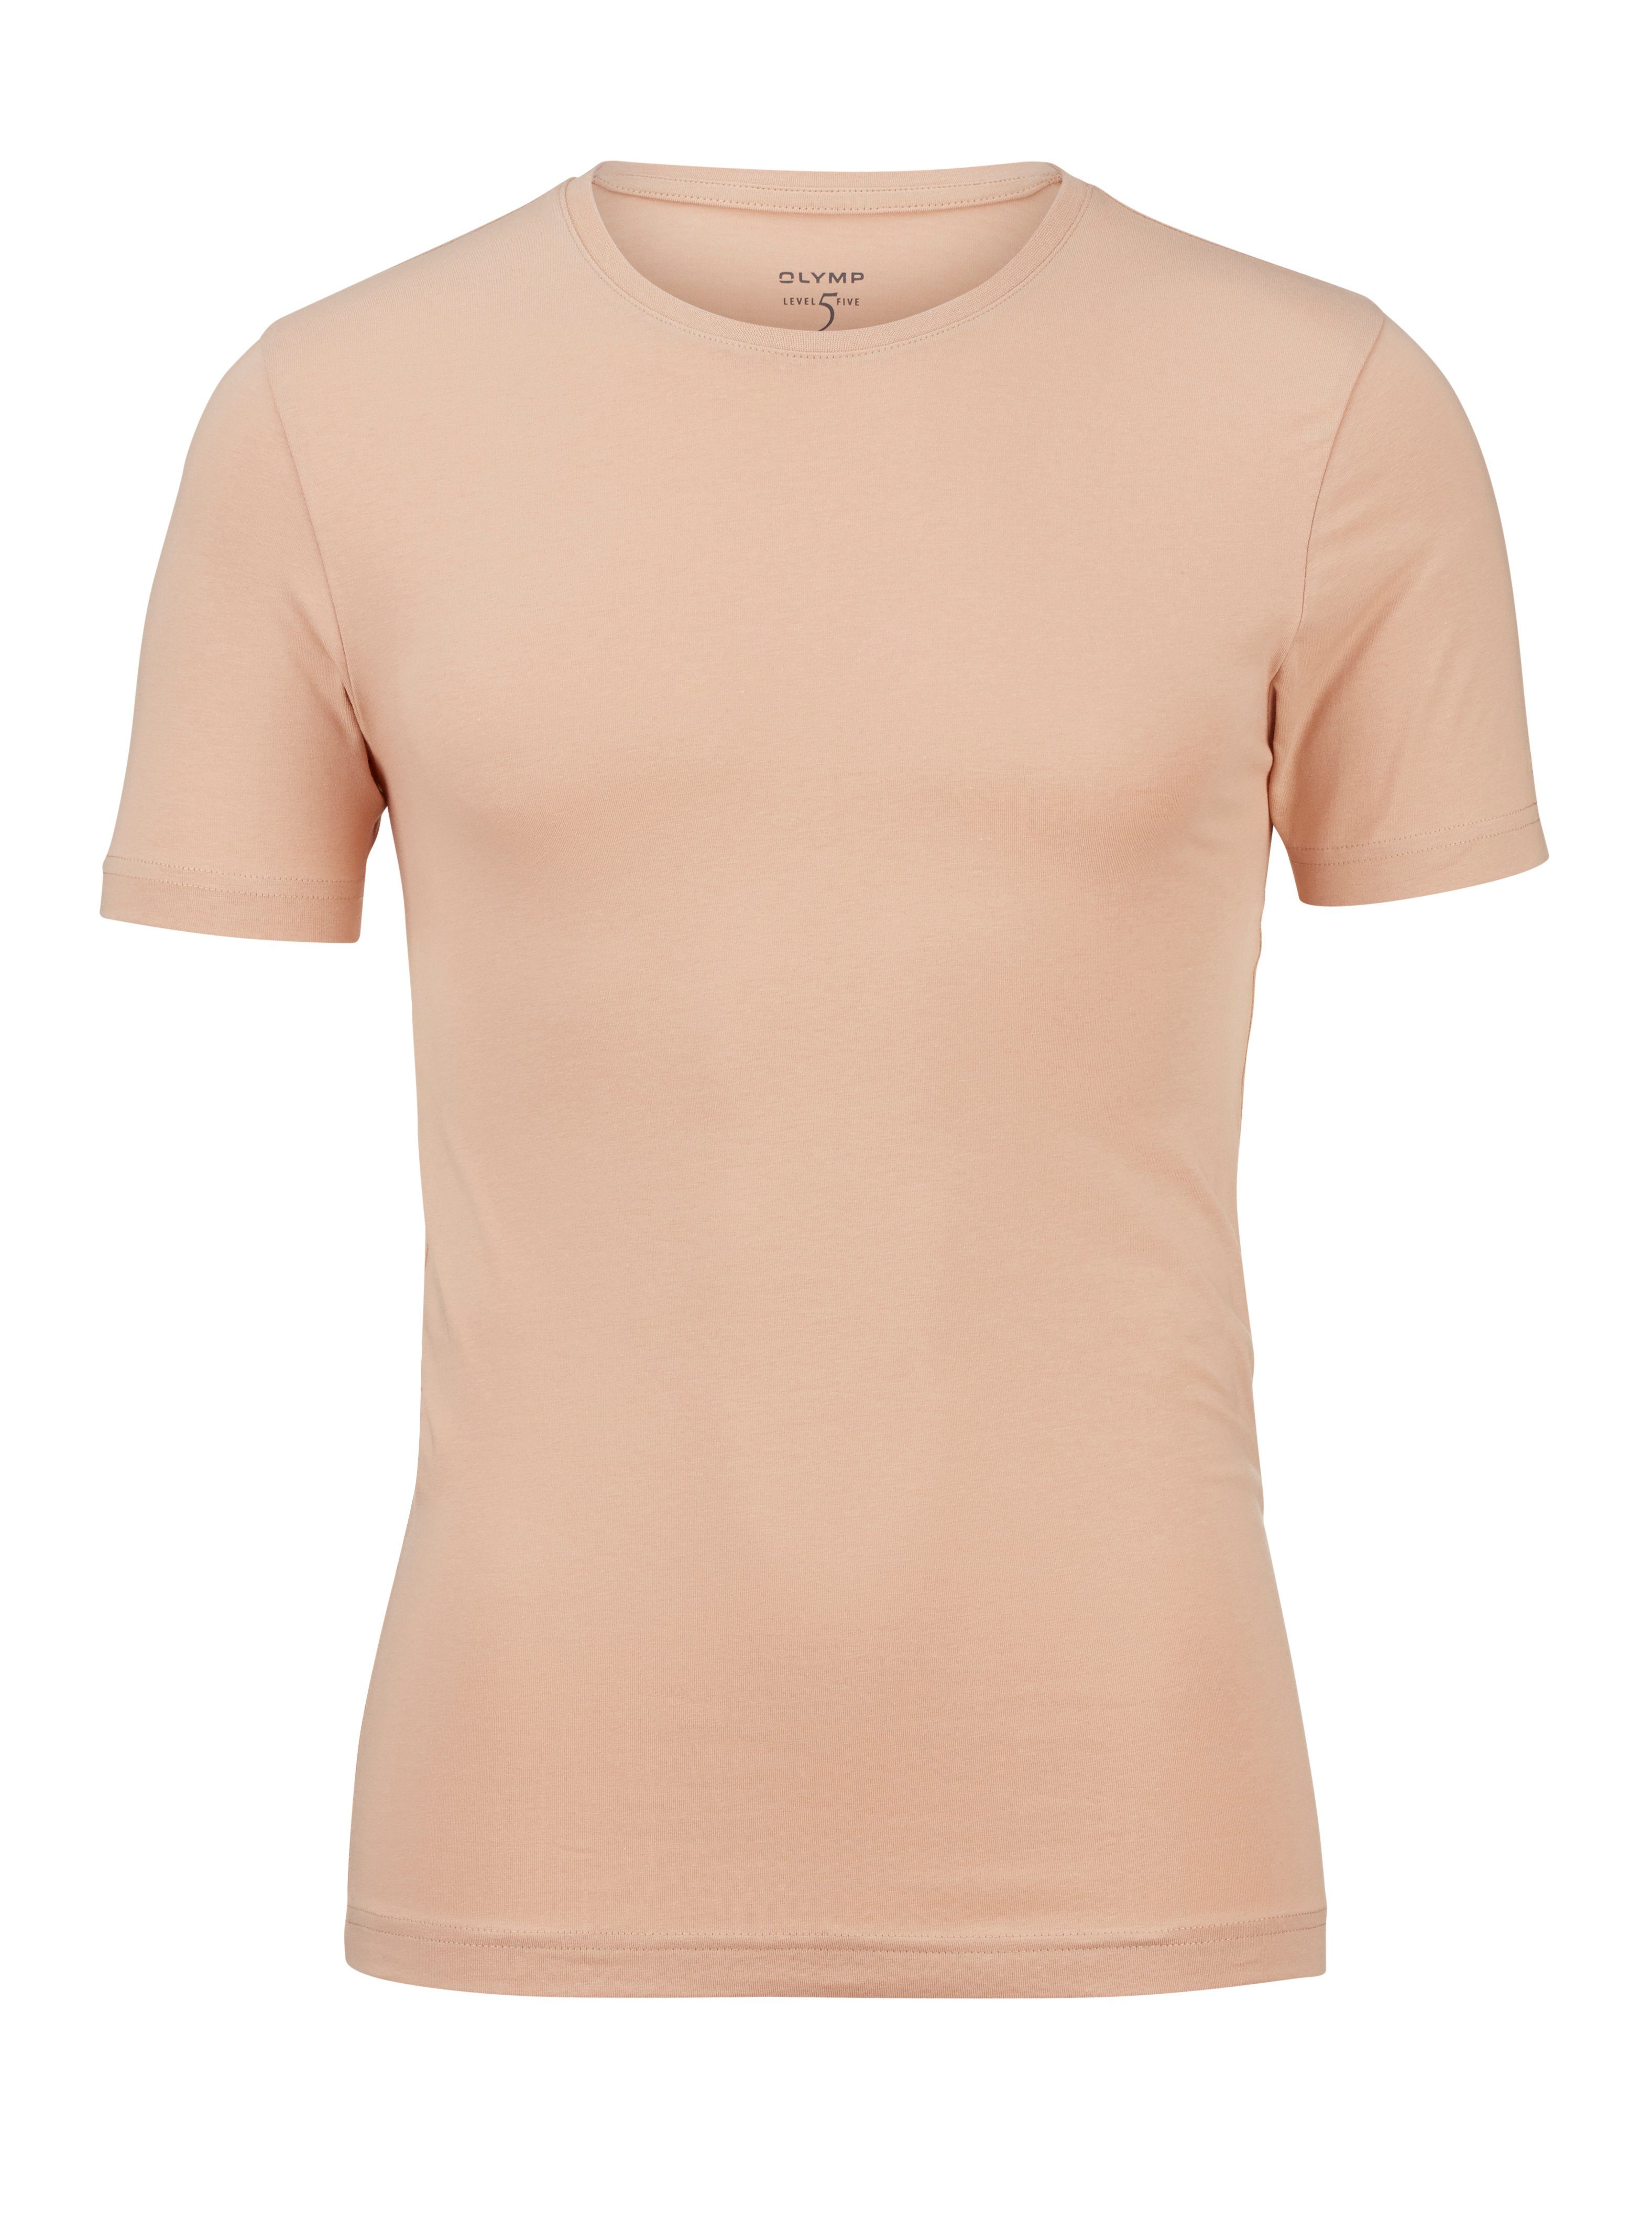 T-Shirt fit caramel OLYMP Level 5 body